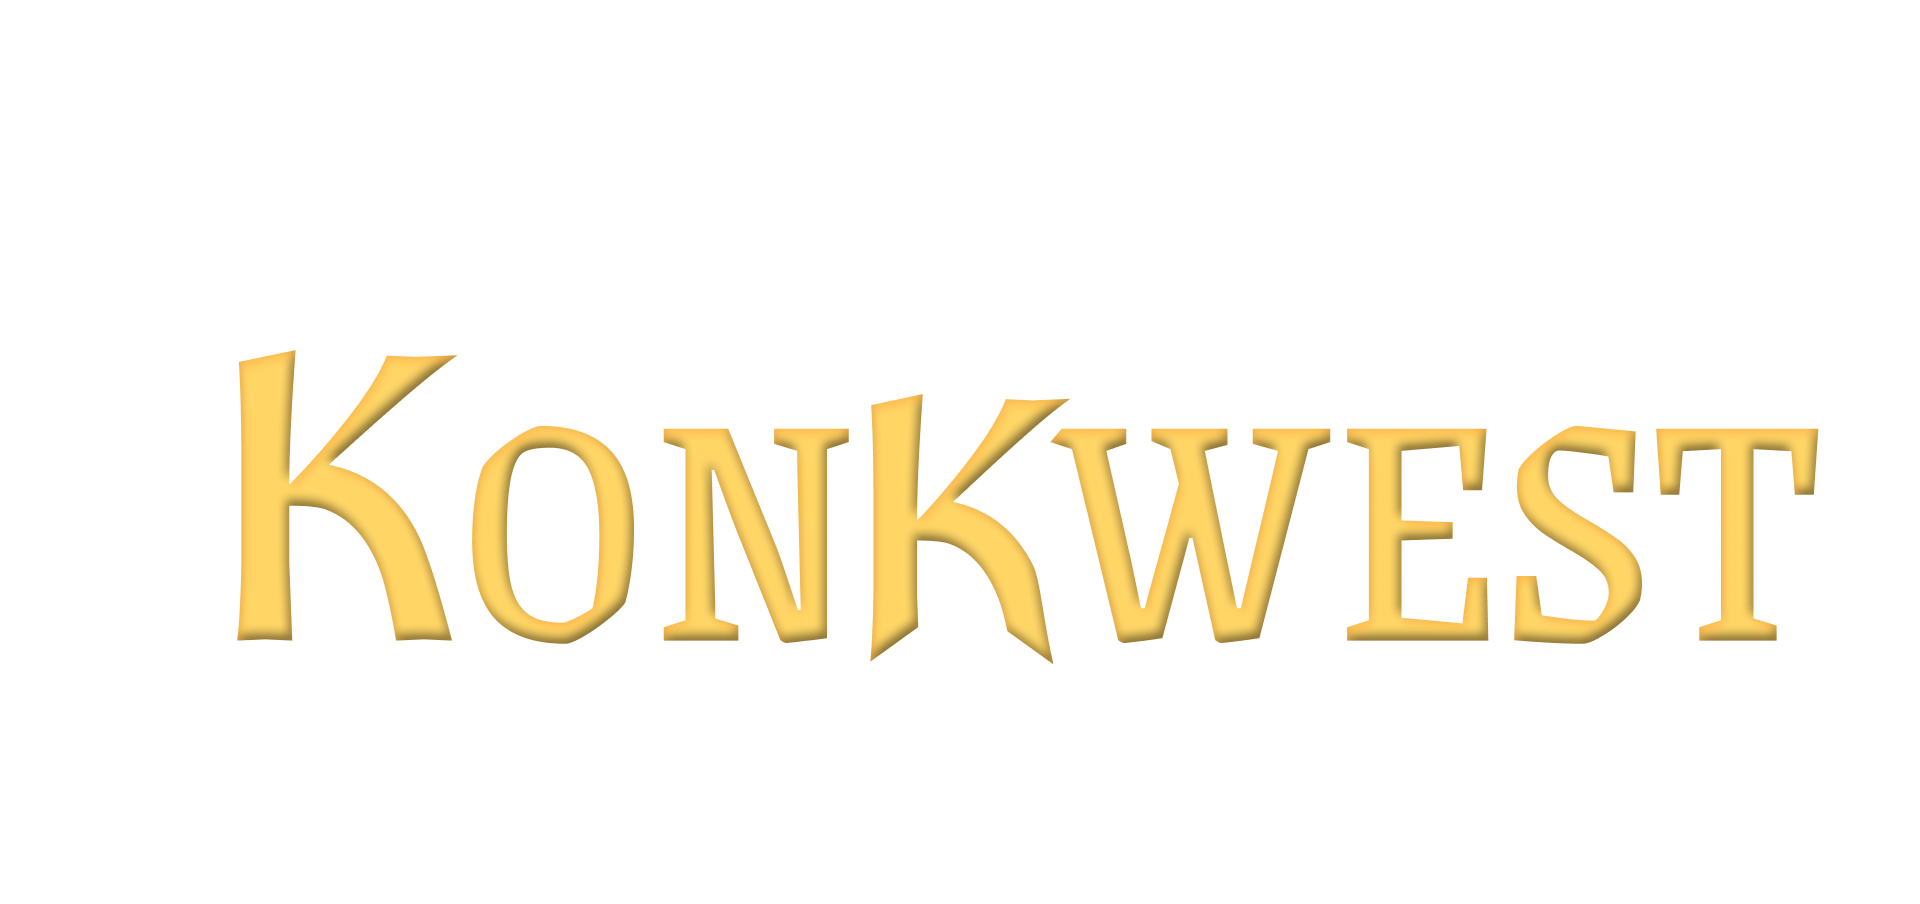 Konkwest logo